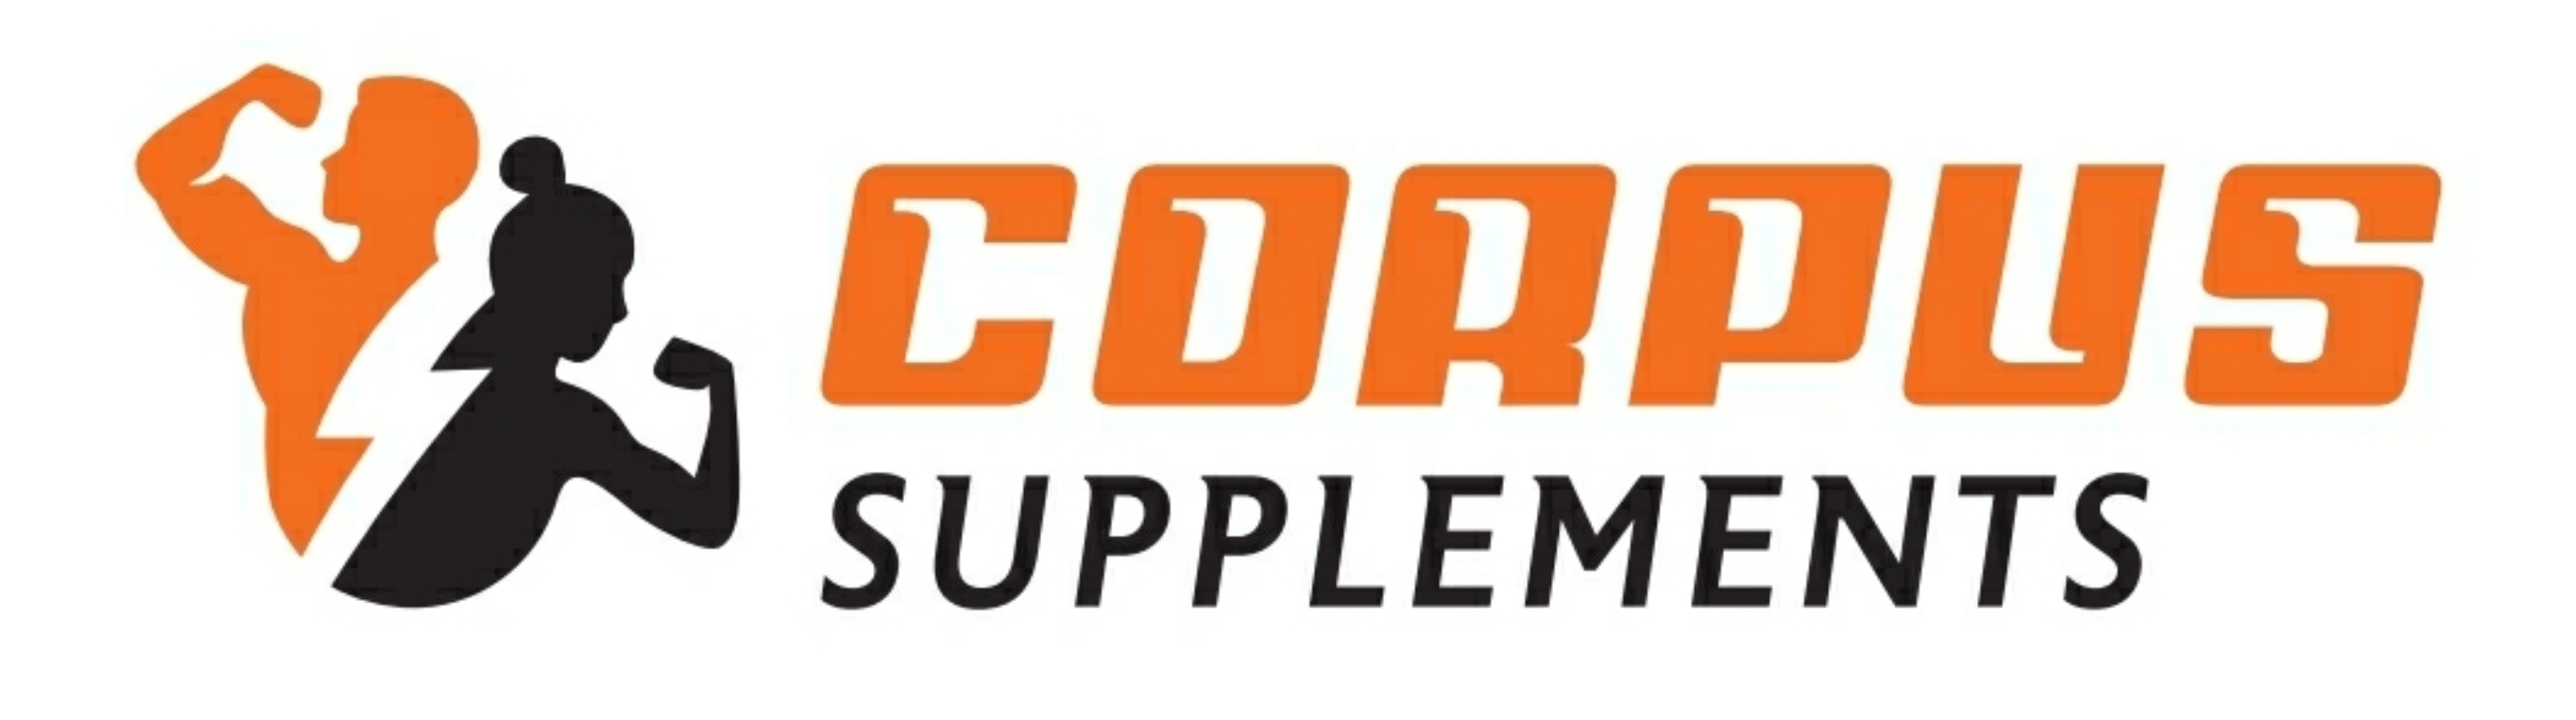 Corpus Supplements